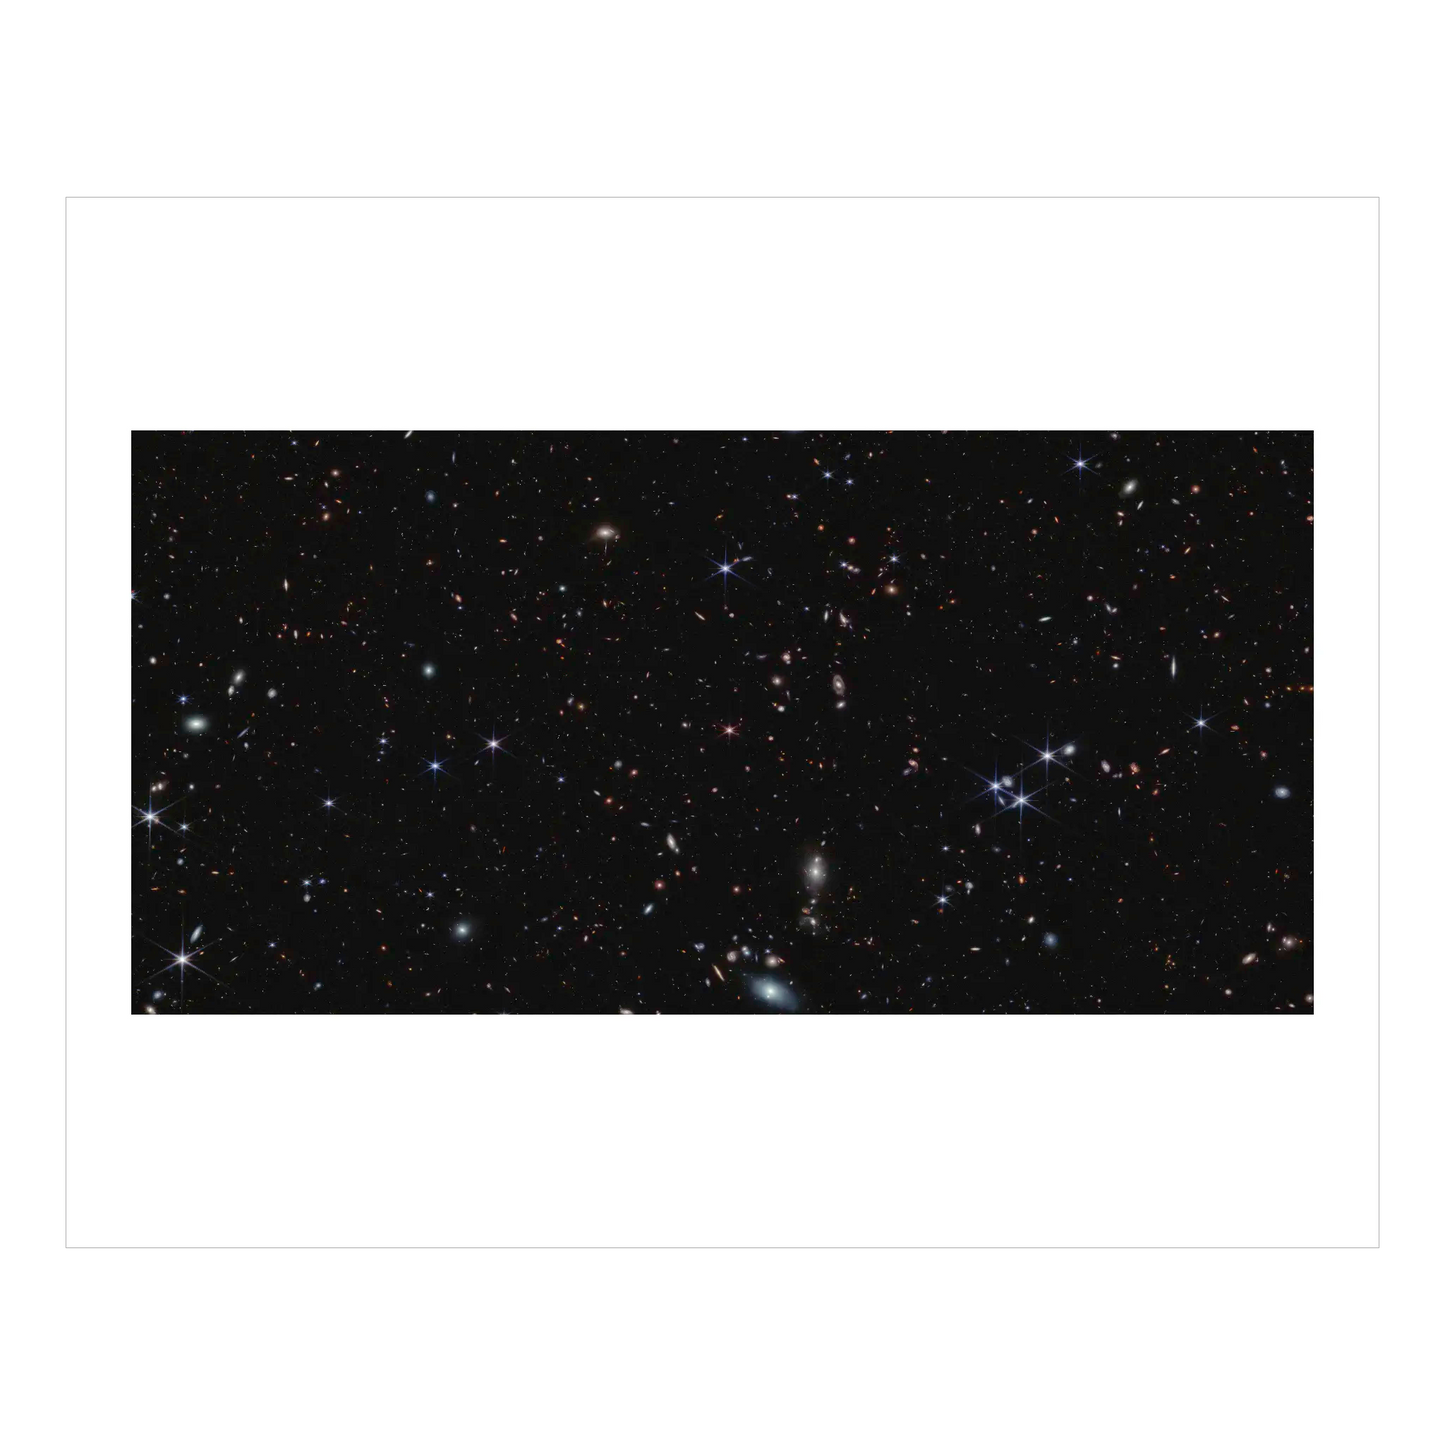 Quasar J0100+2802 and 20,000 Galaxies